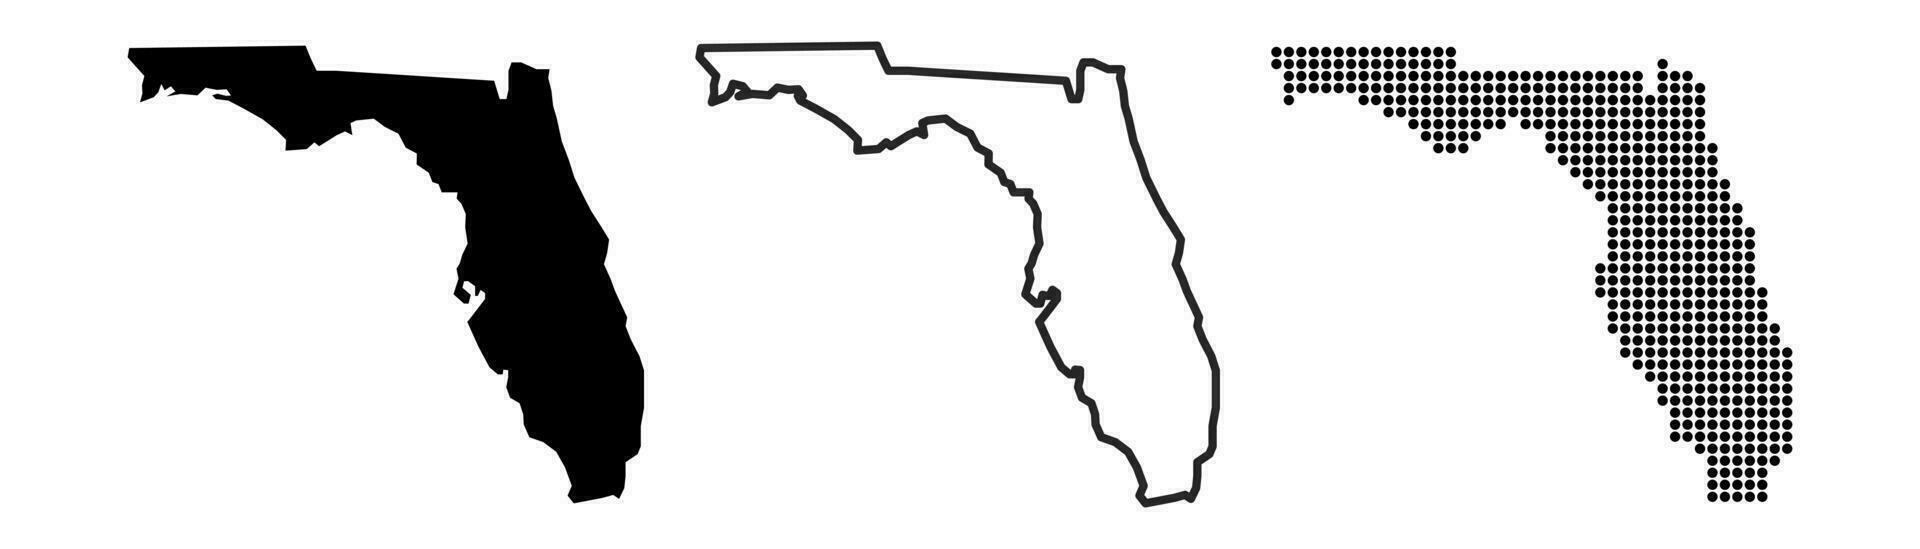 Floride carte contour. Floride Etat carte. glyphe et contour Floride carte. nous Etat carte. Sarasota comté. tampa et Miami silhouette. vecteur